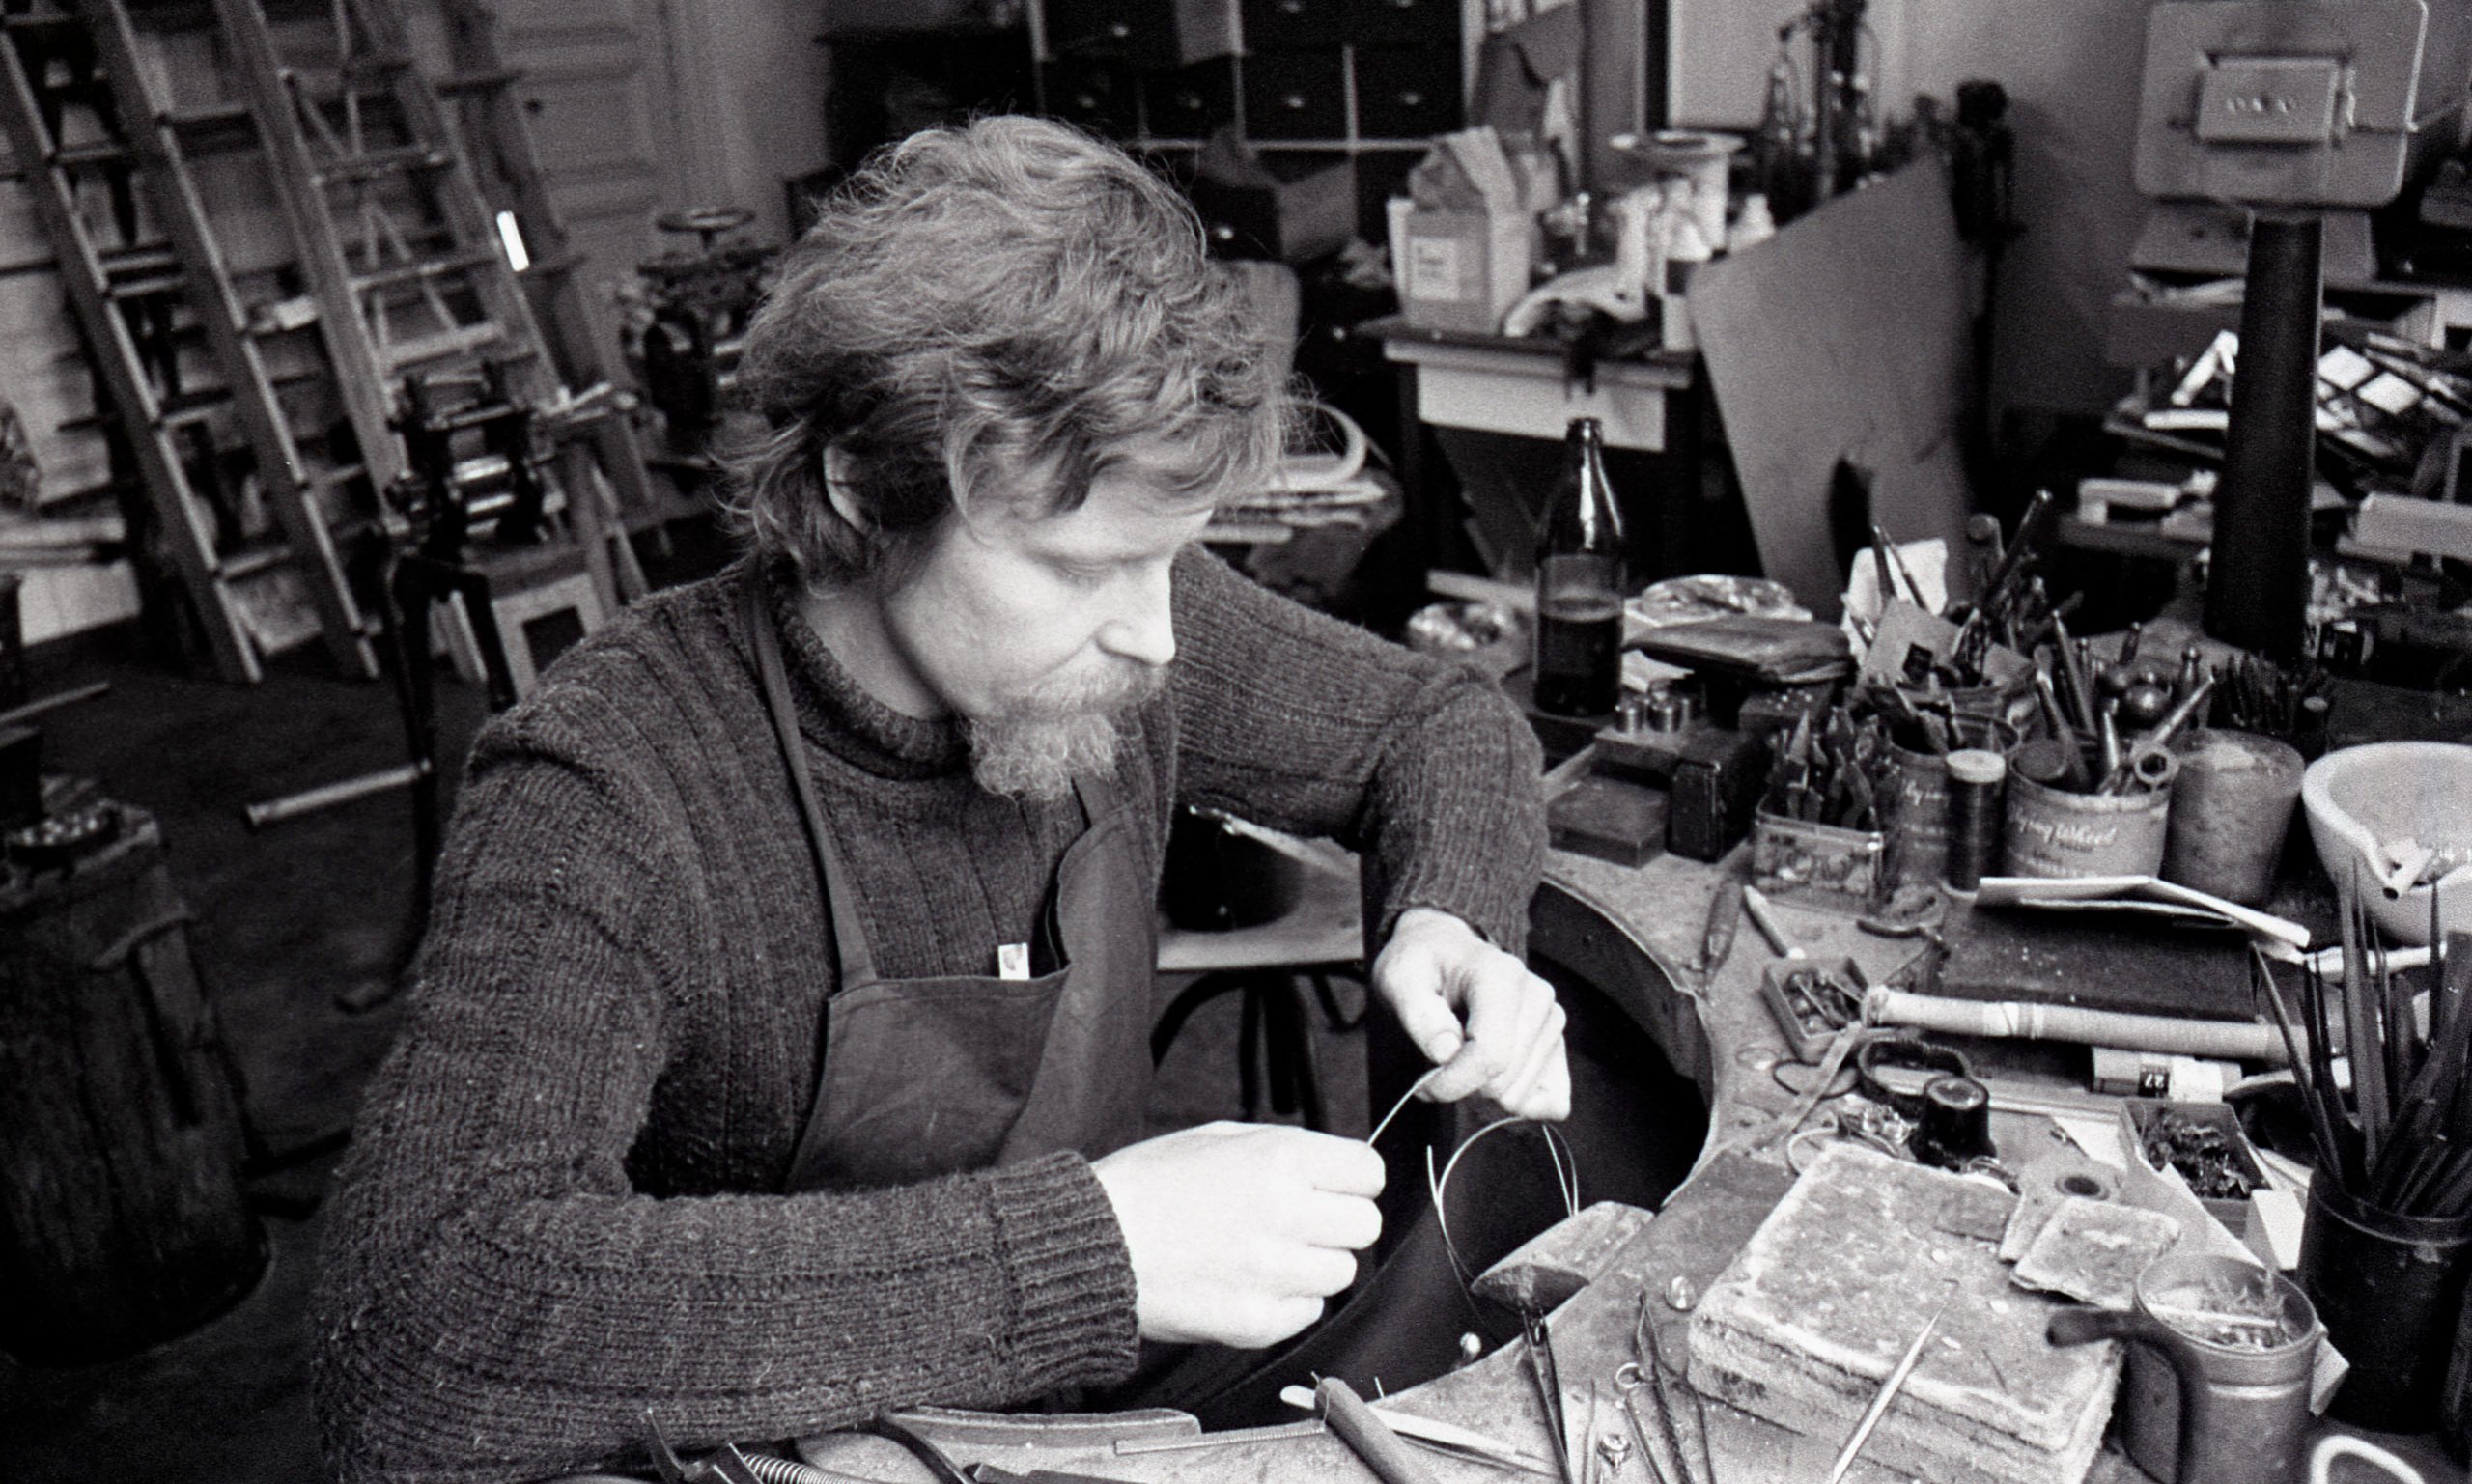 Goldschmied bei der Arbeit, 1980. Foto: Imago/Frank Sorge